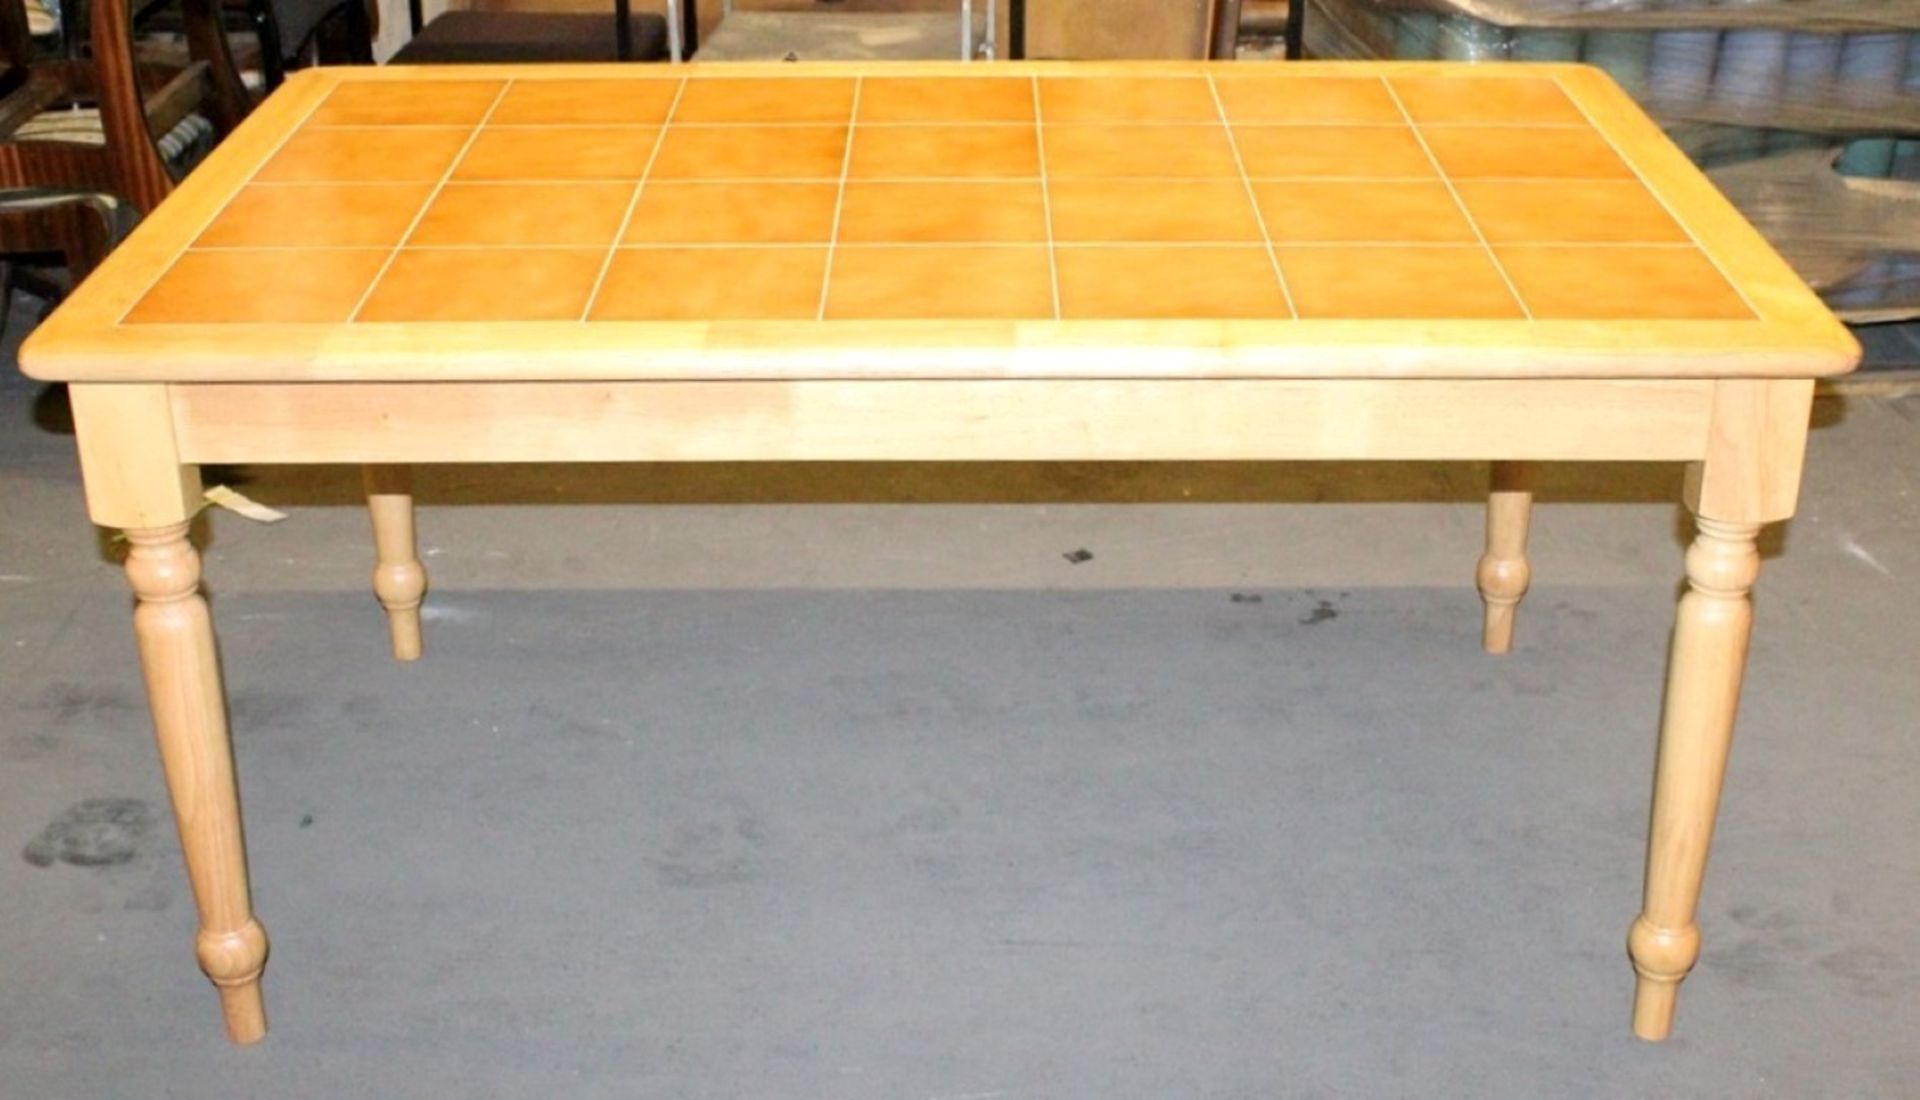 1 x Tile Top Light Oak Table - 154 x 94cm - Prebuilt, In Excellent Condition – Ref: JSB120 - Current - Image 4 of 5